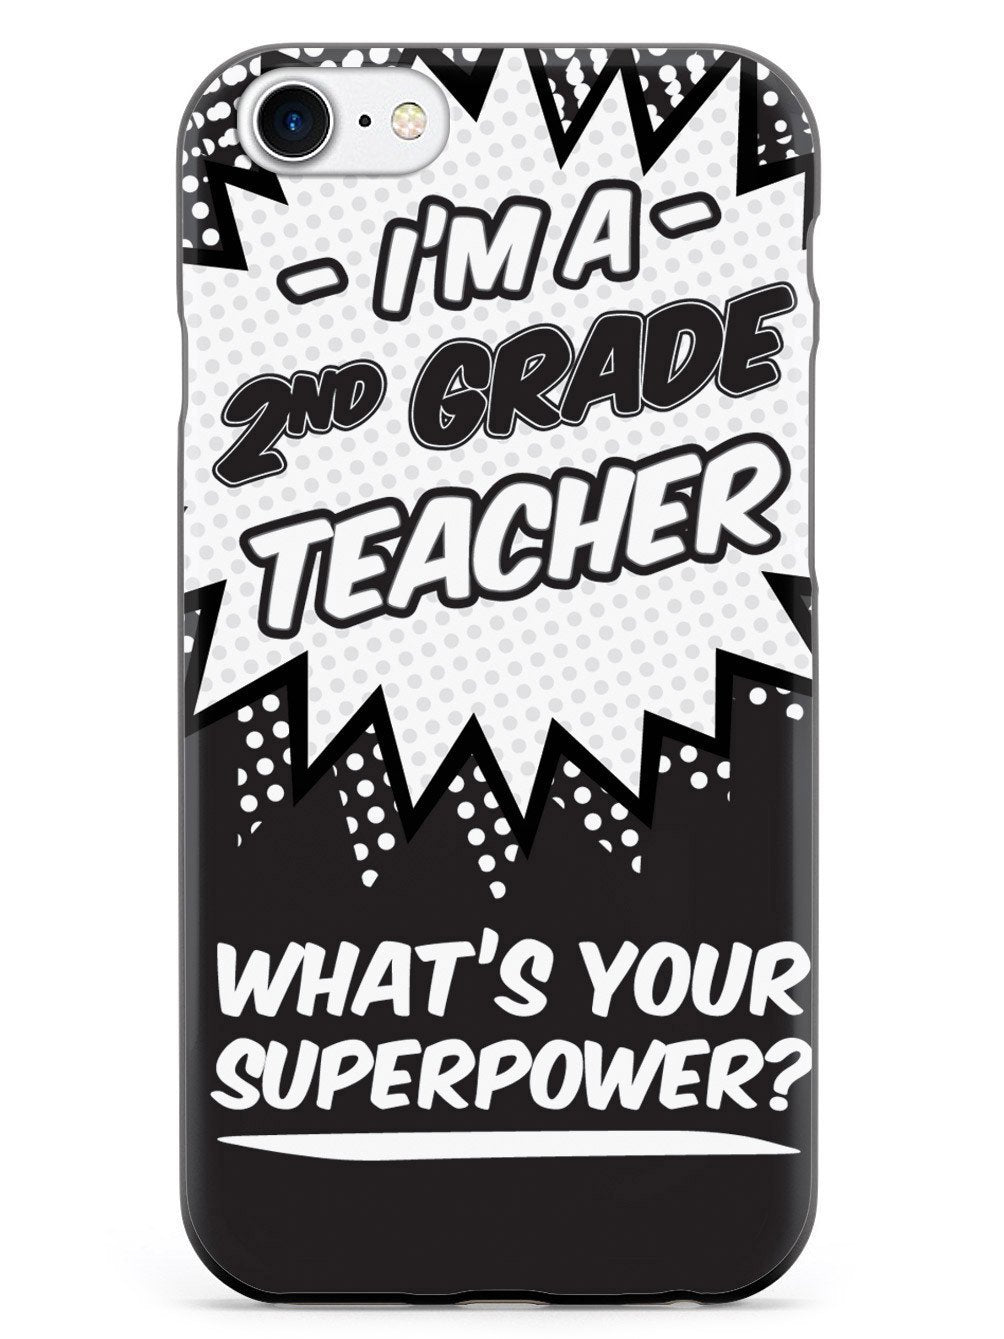 2nd Grade Teacher - What's Your Superpower? Case